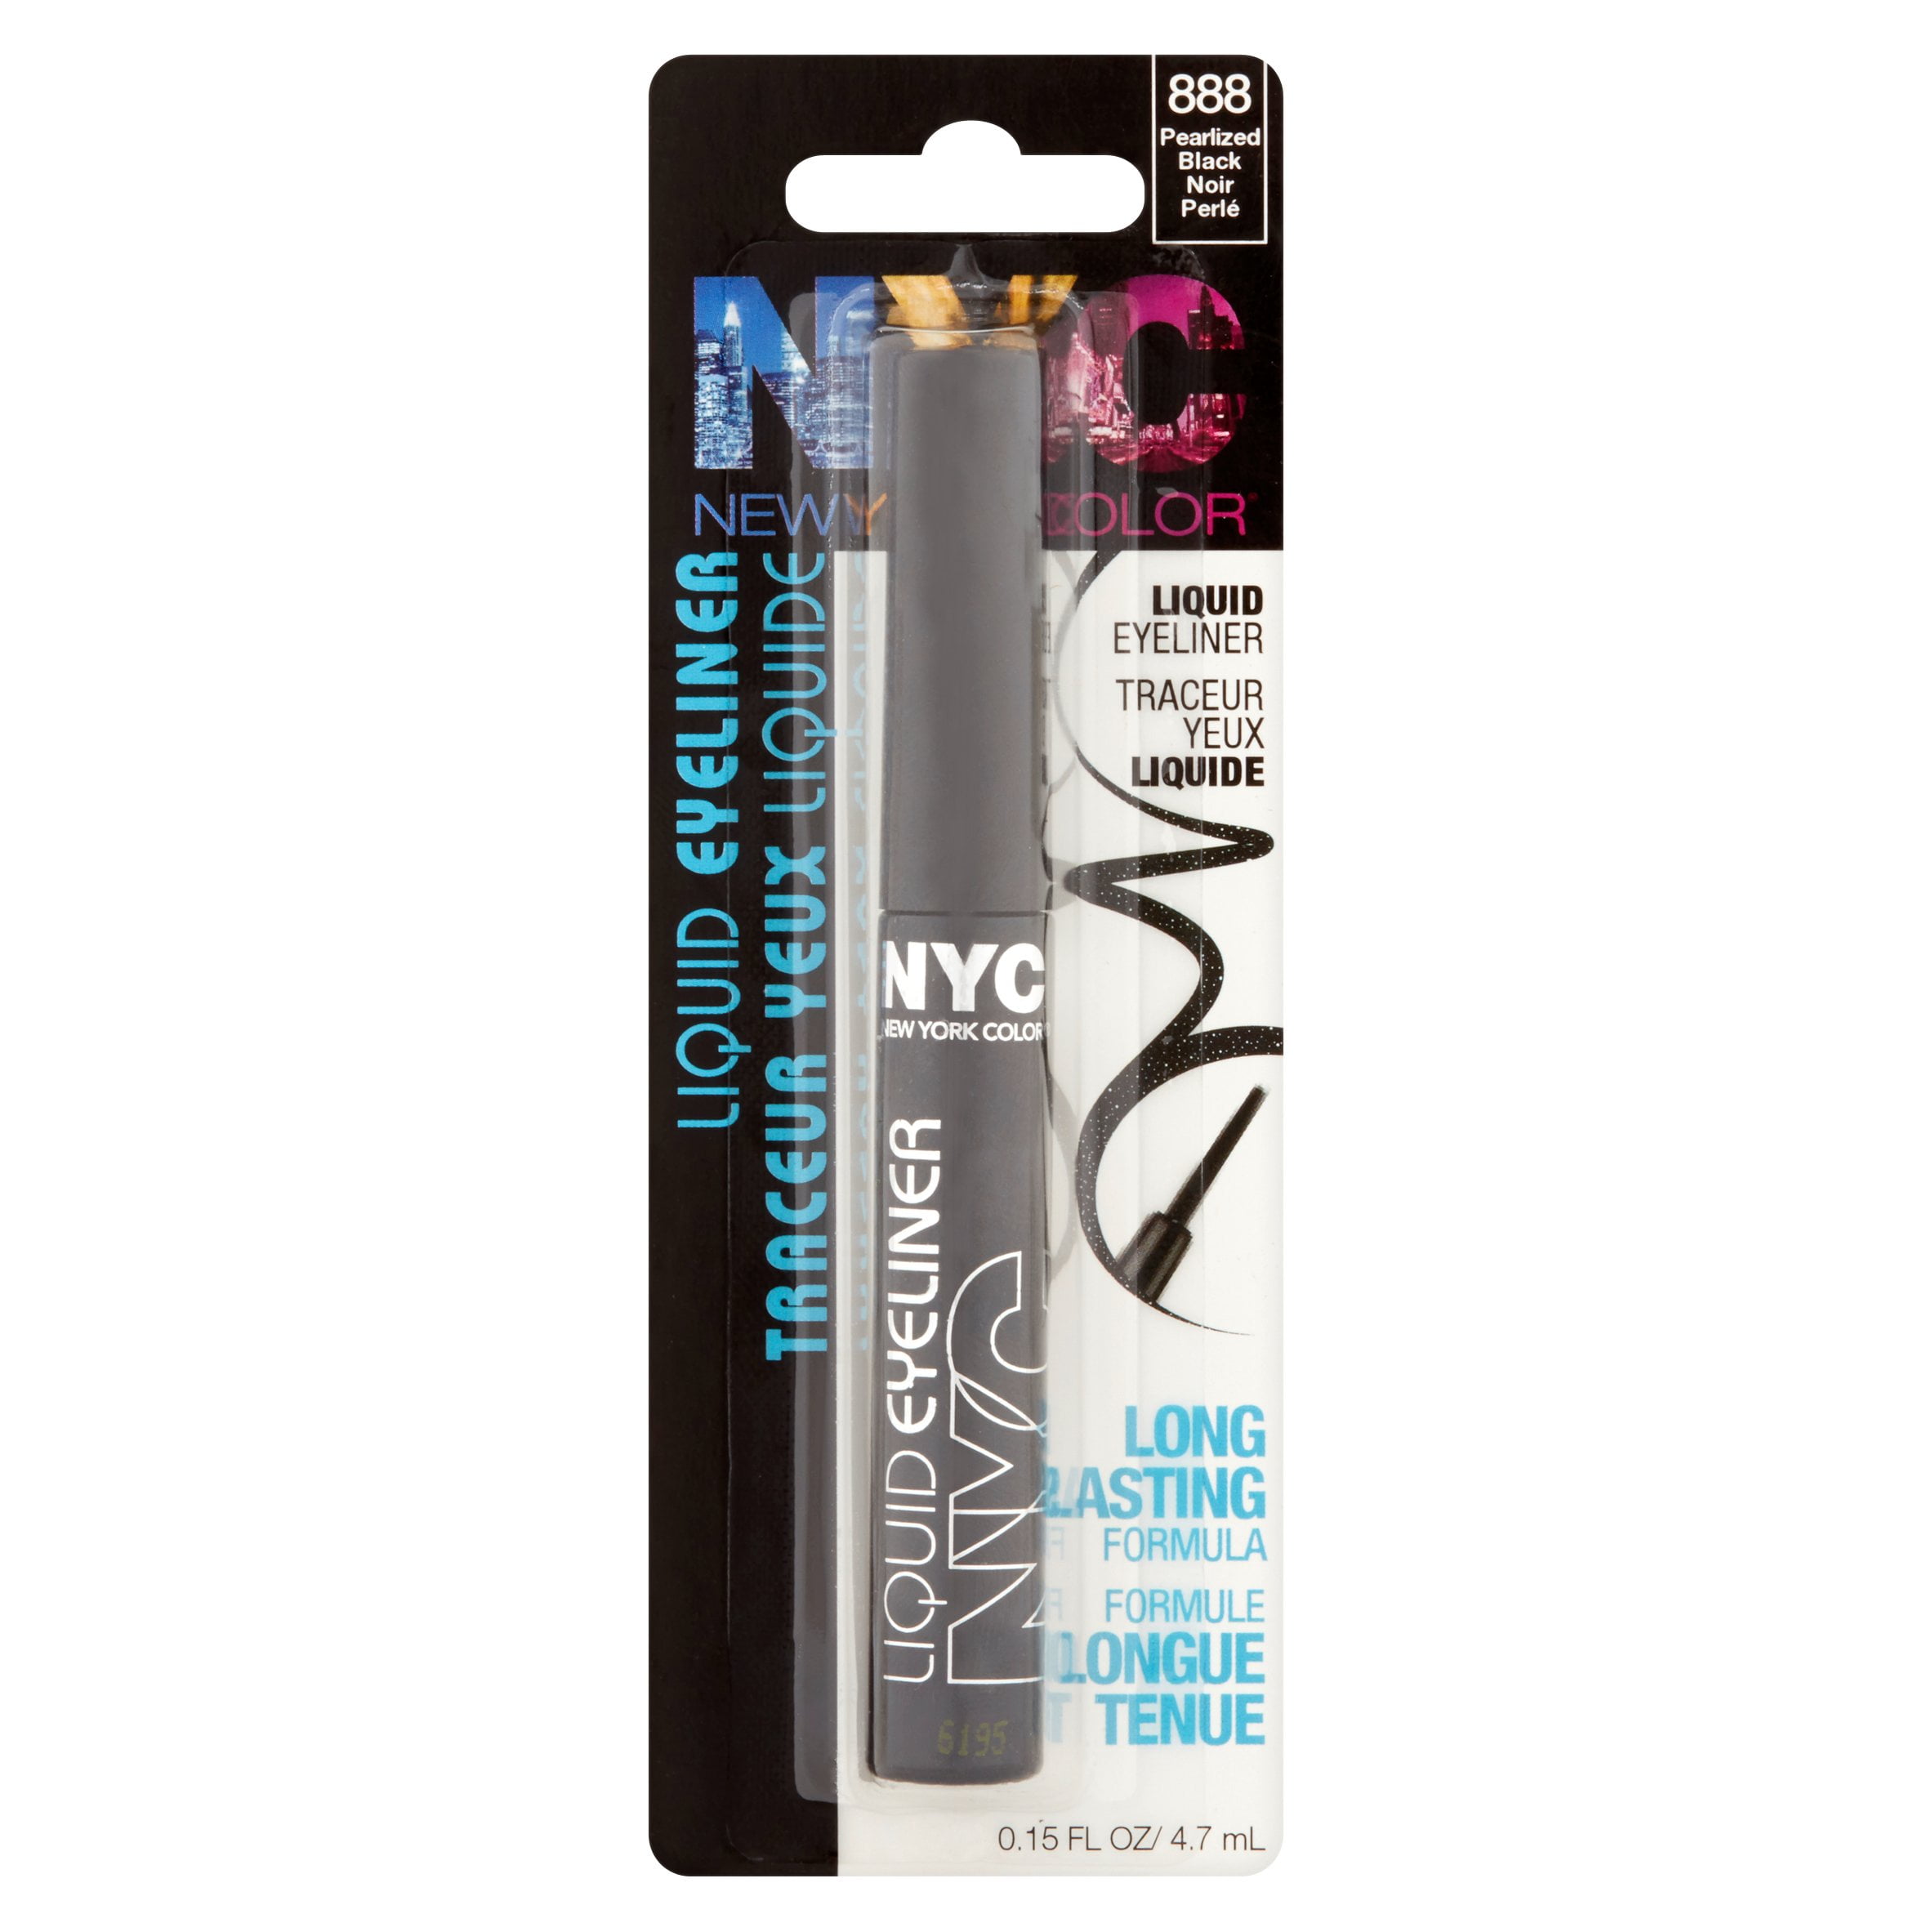 Nyc New York Color Liquid Eyeliner 888